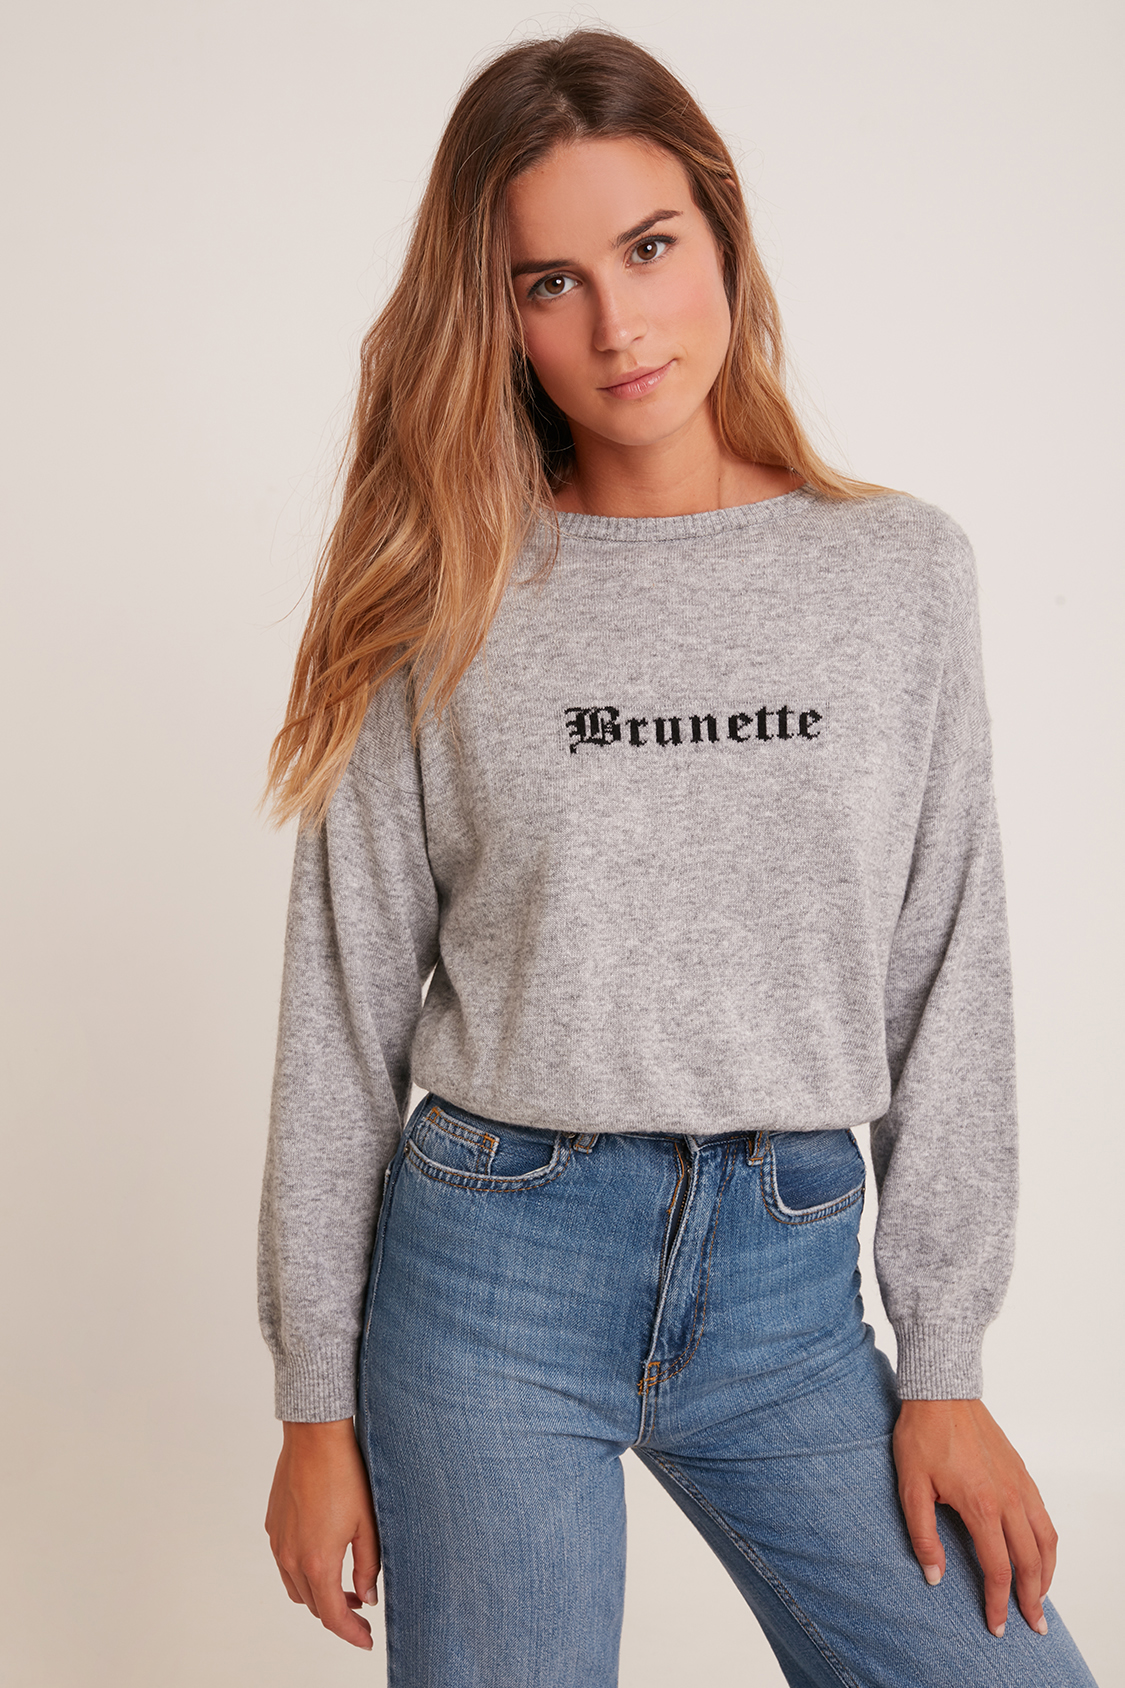 Brunette sweater